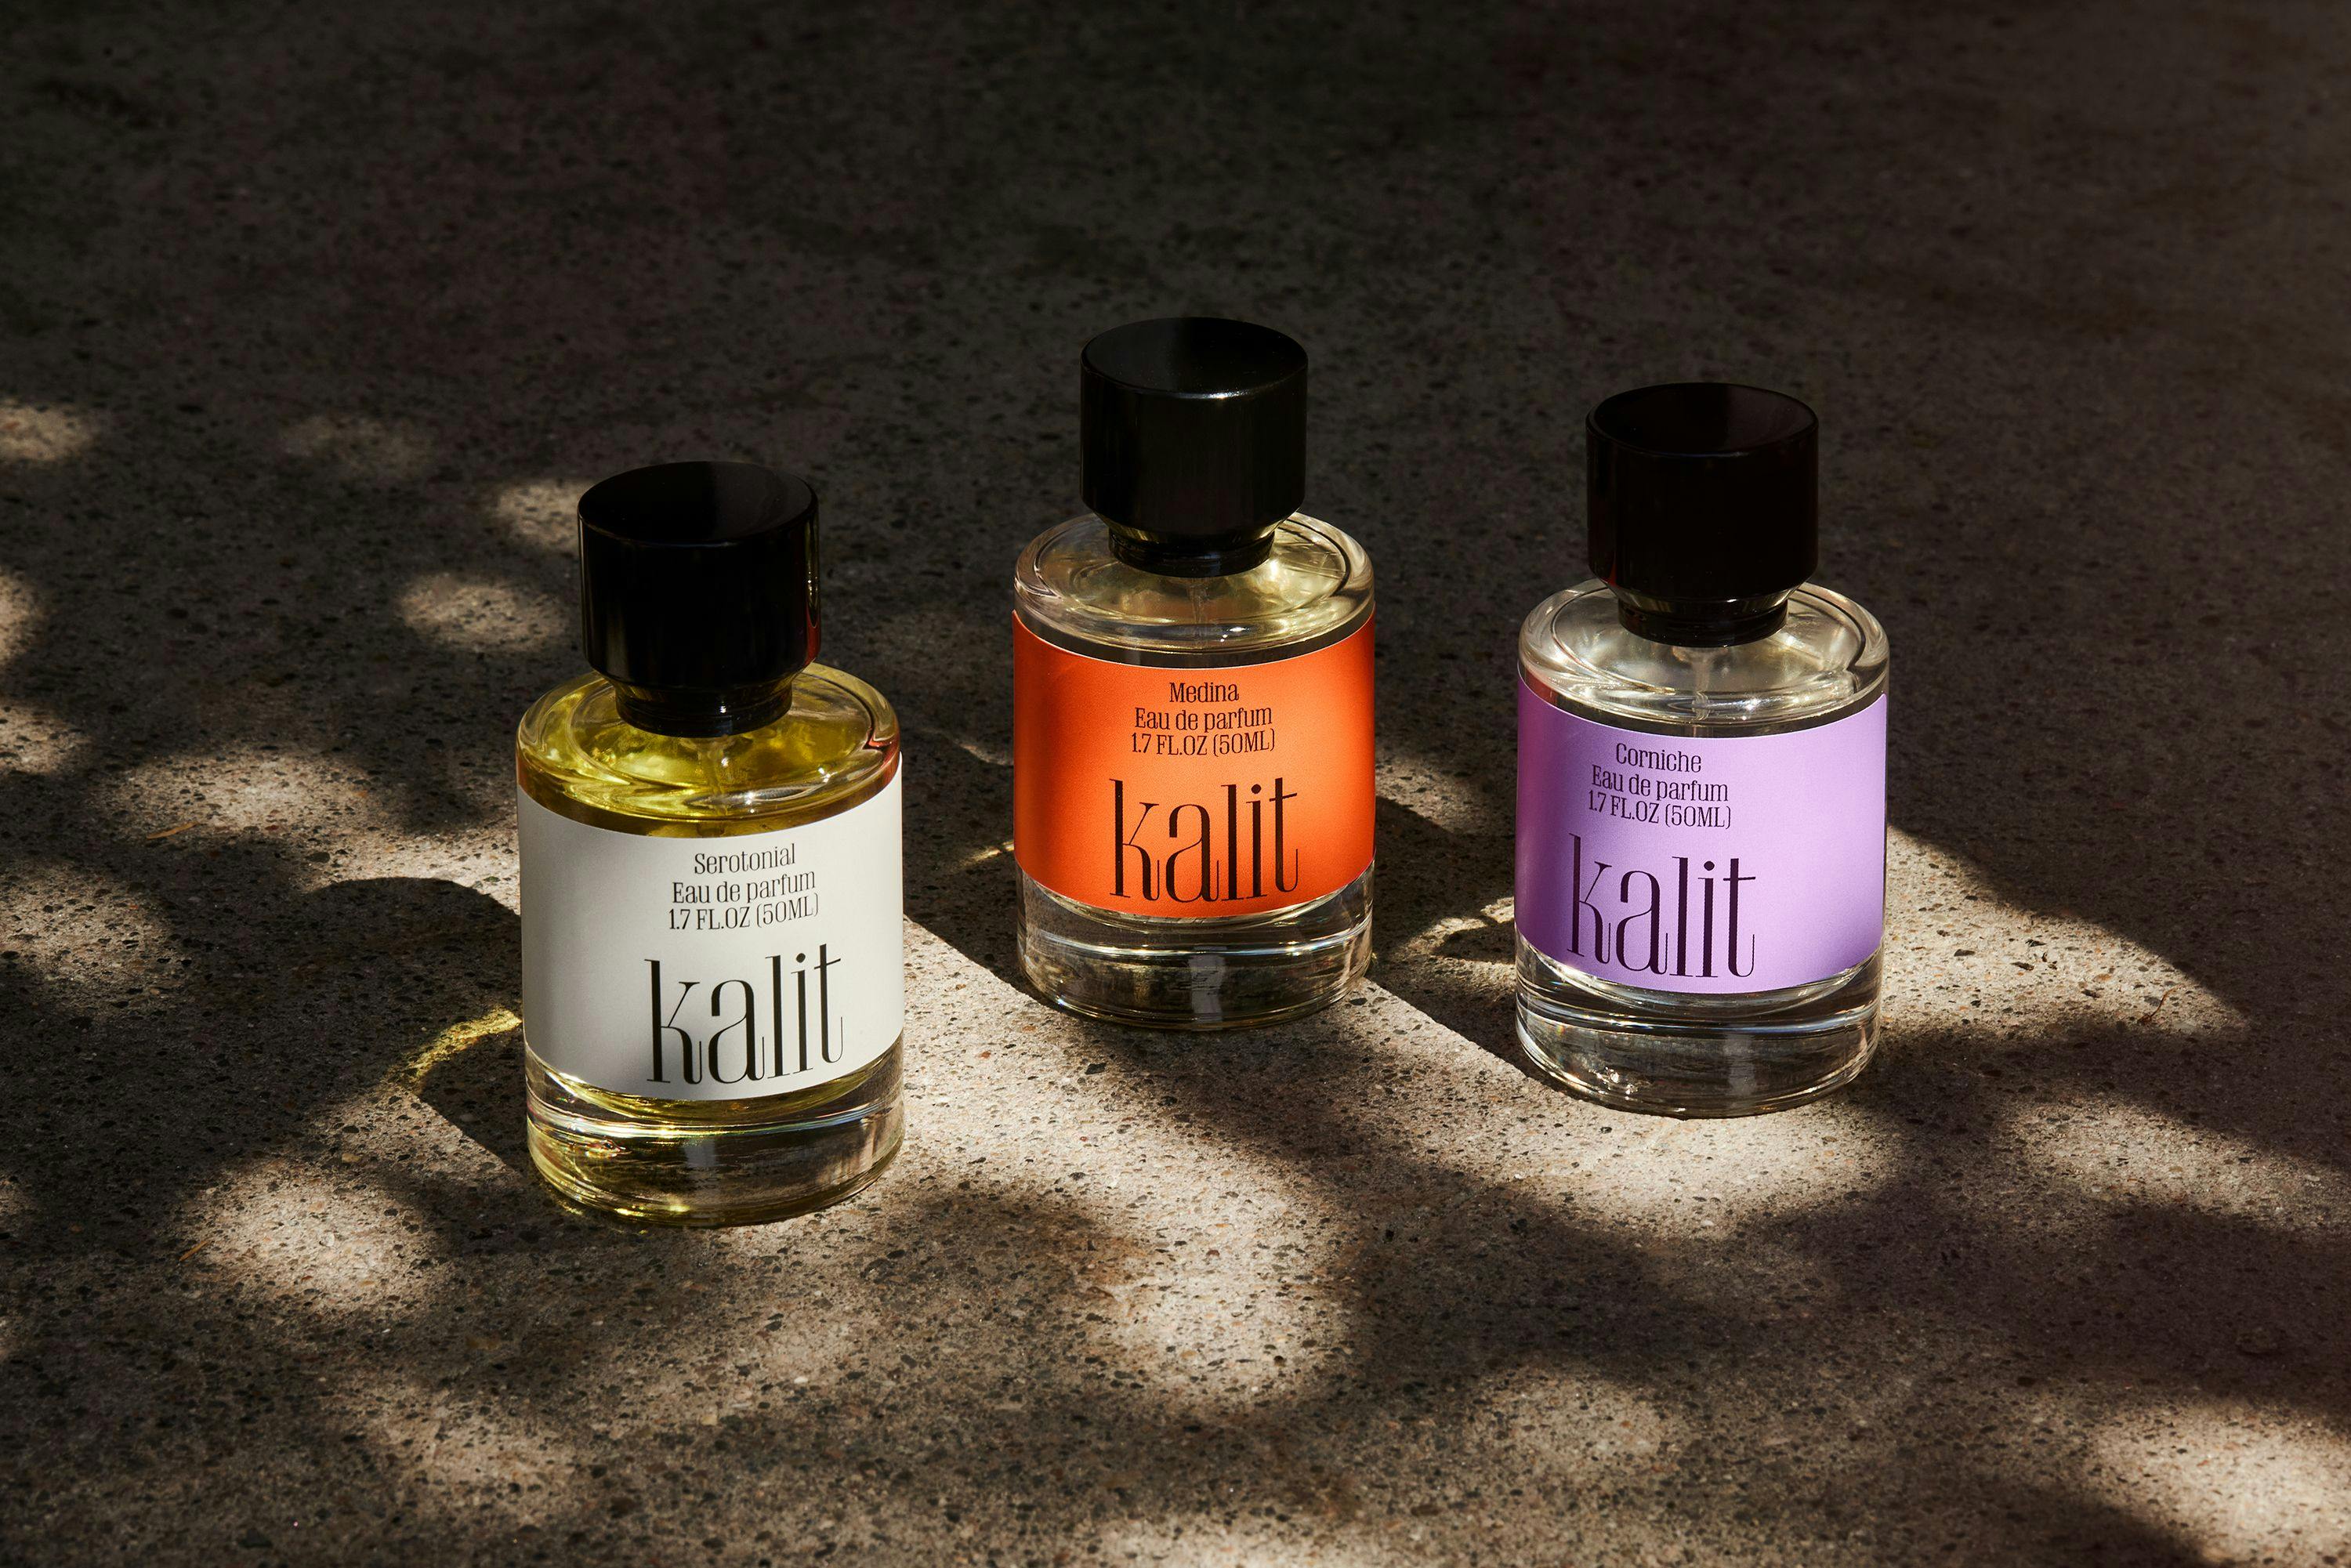 Three fragrances by Kalit, bottles